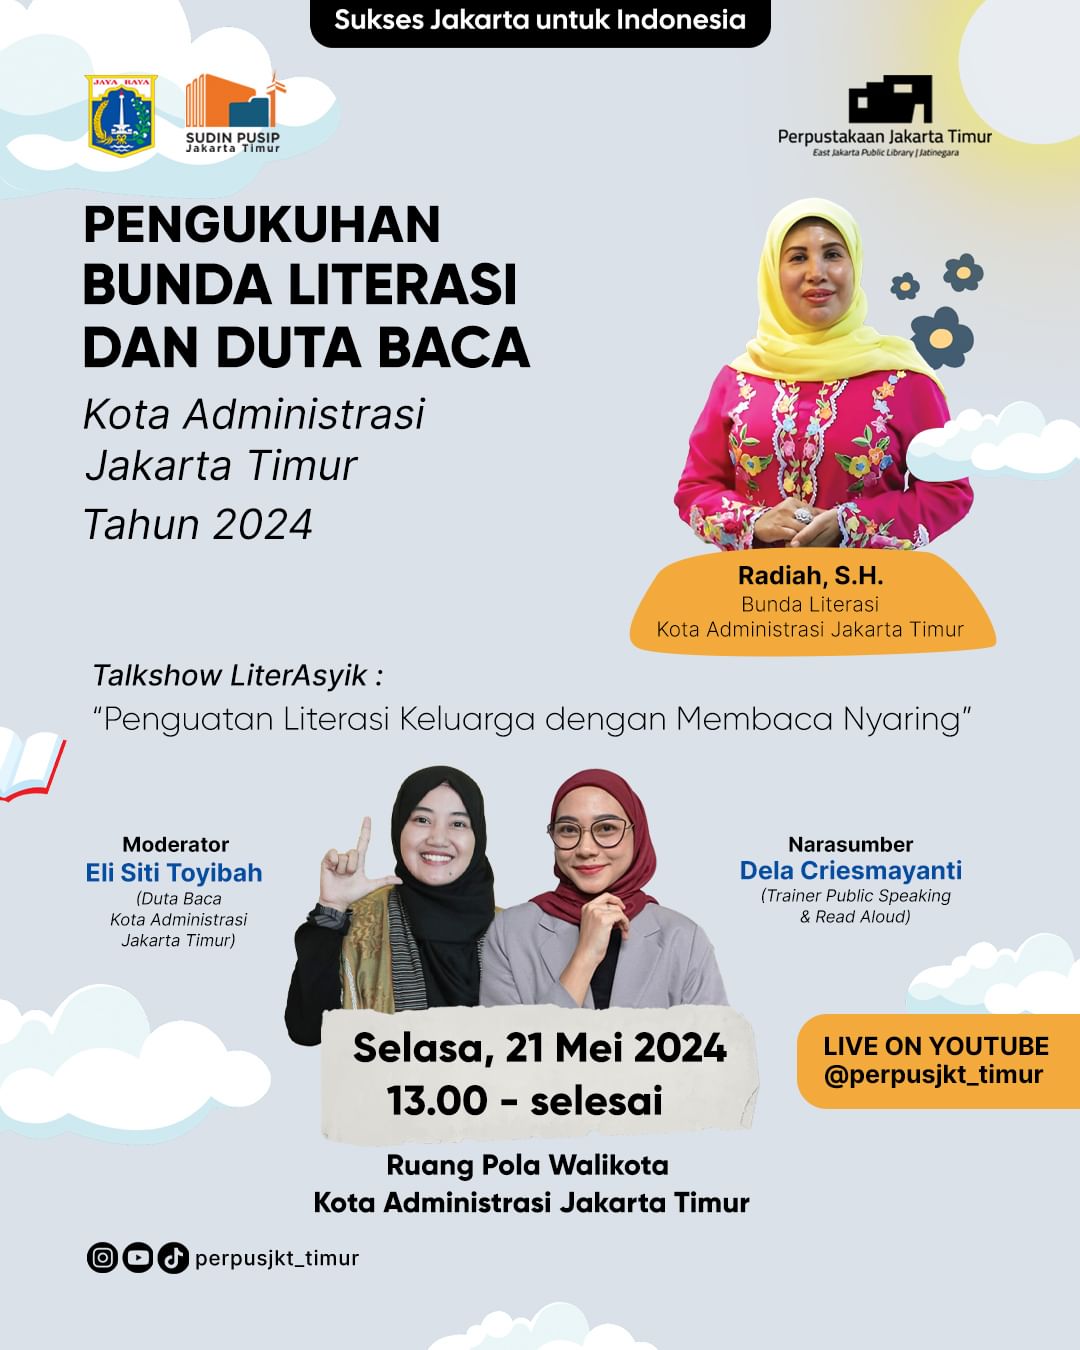 Pengukuhan Bunda Literasi Dan Duta Baca Jakarta Timur 2024 & Talkshow "Penguatan Literasi Keluarga Melalui Membaca Nyaring"